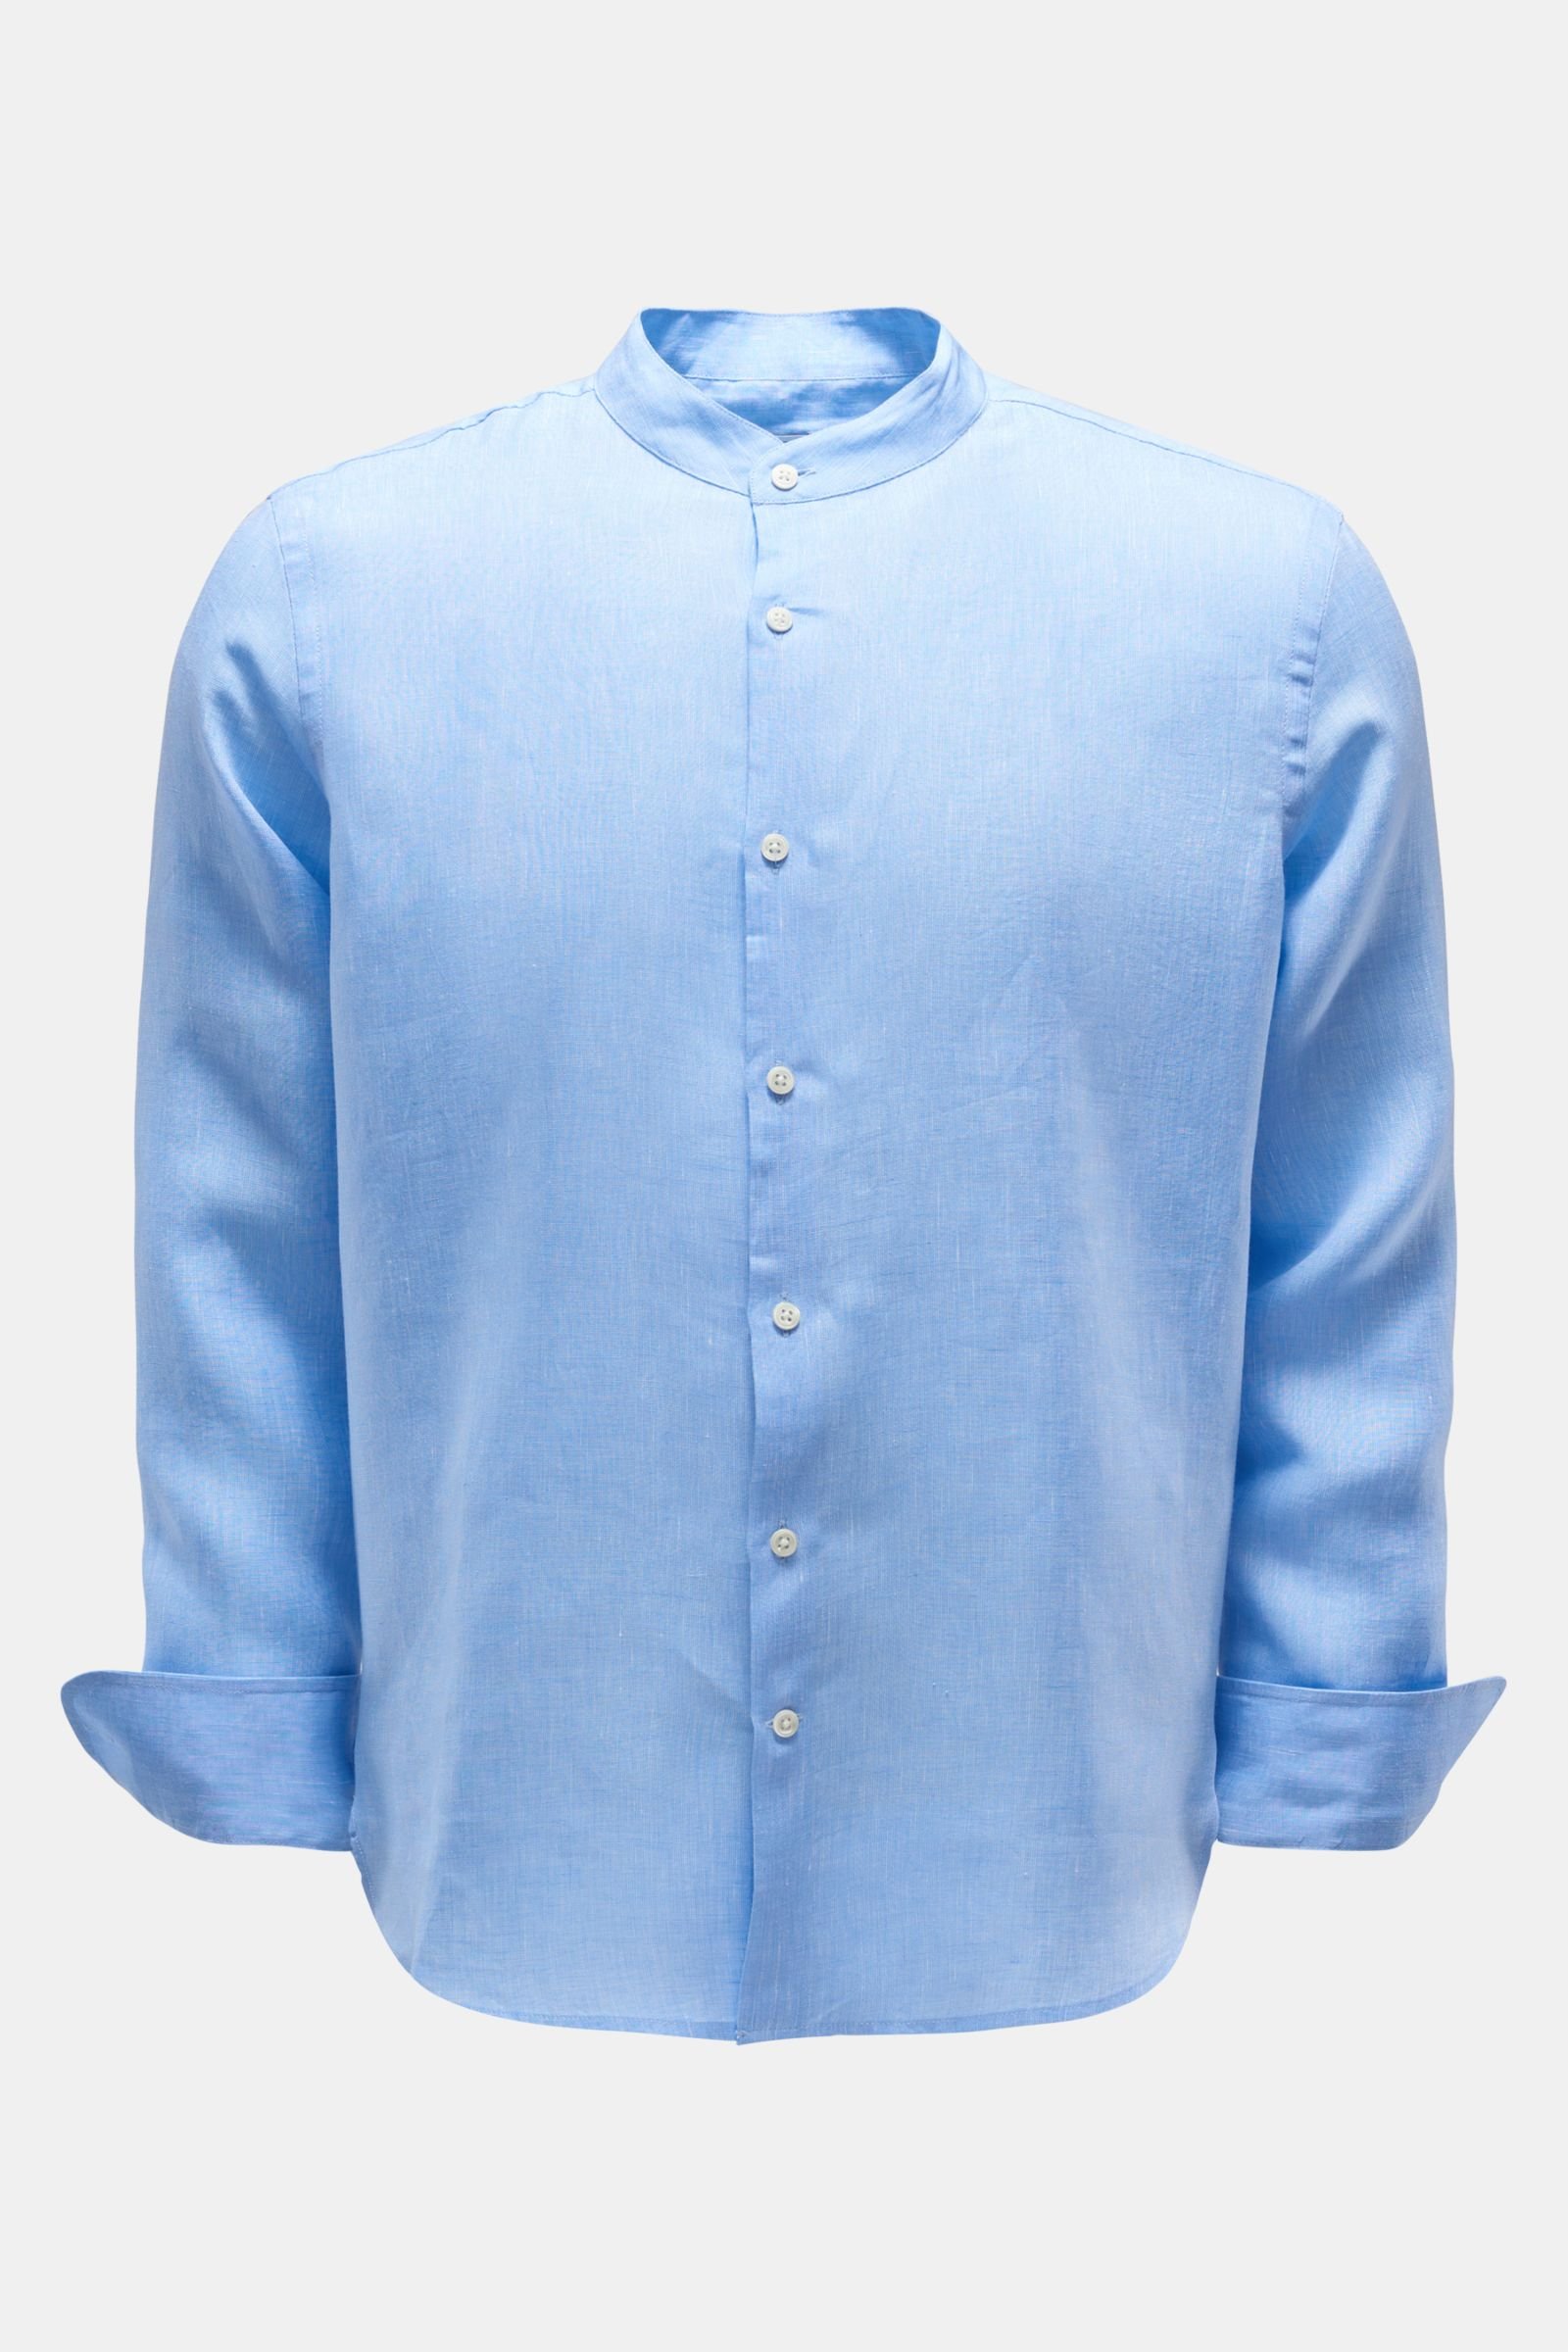 Leinenhemd Grandad-Kragen hellblau